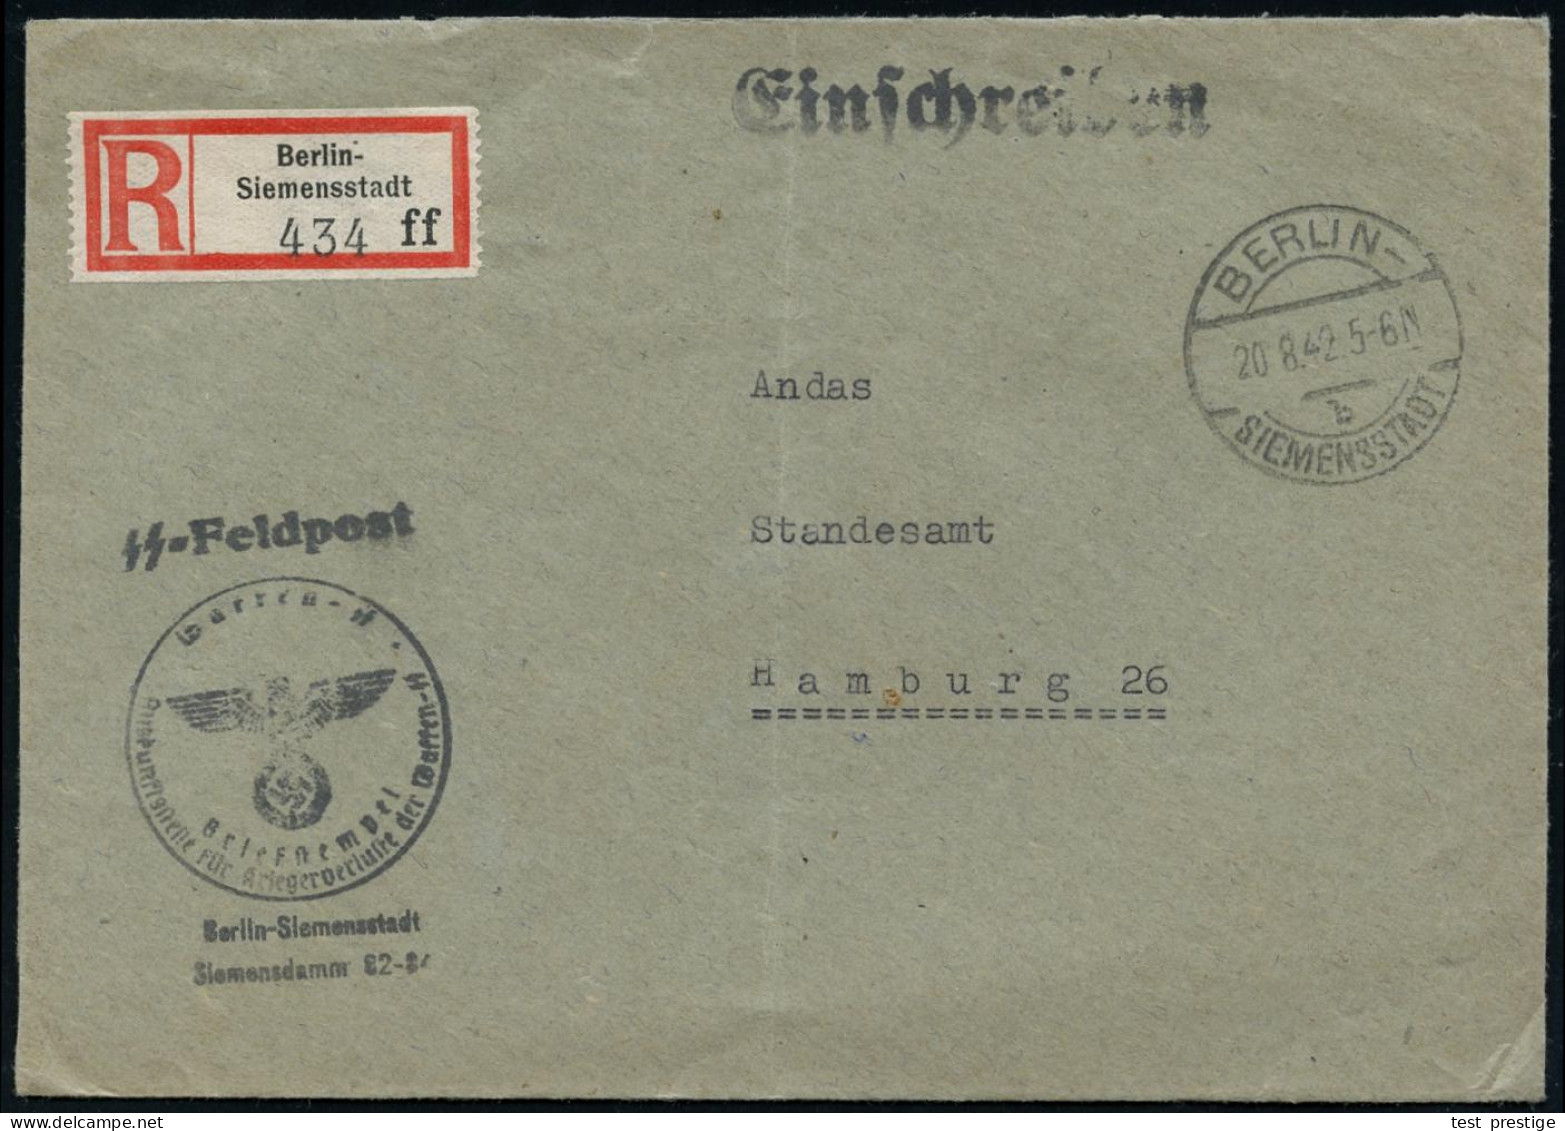 BERLIN-/ B/ SIEMENSSTADT 1942 (20.8.) 1K-Brücke + Selbstbucher-RZ: Berlin-/Siemesstadt/ F F + Hdn: S S - Feldpost/ Waffe - WW2 (II Guerra Mundial)